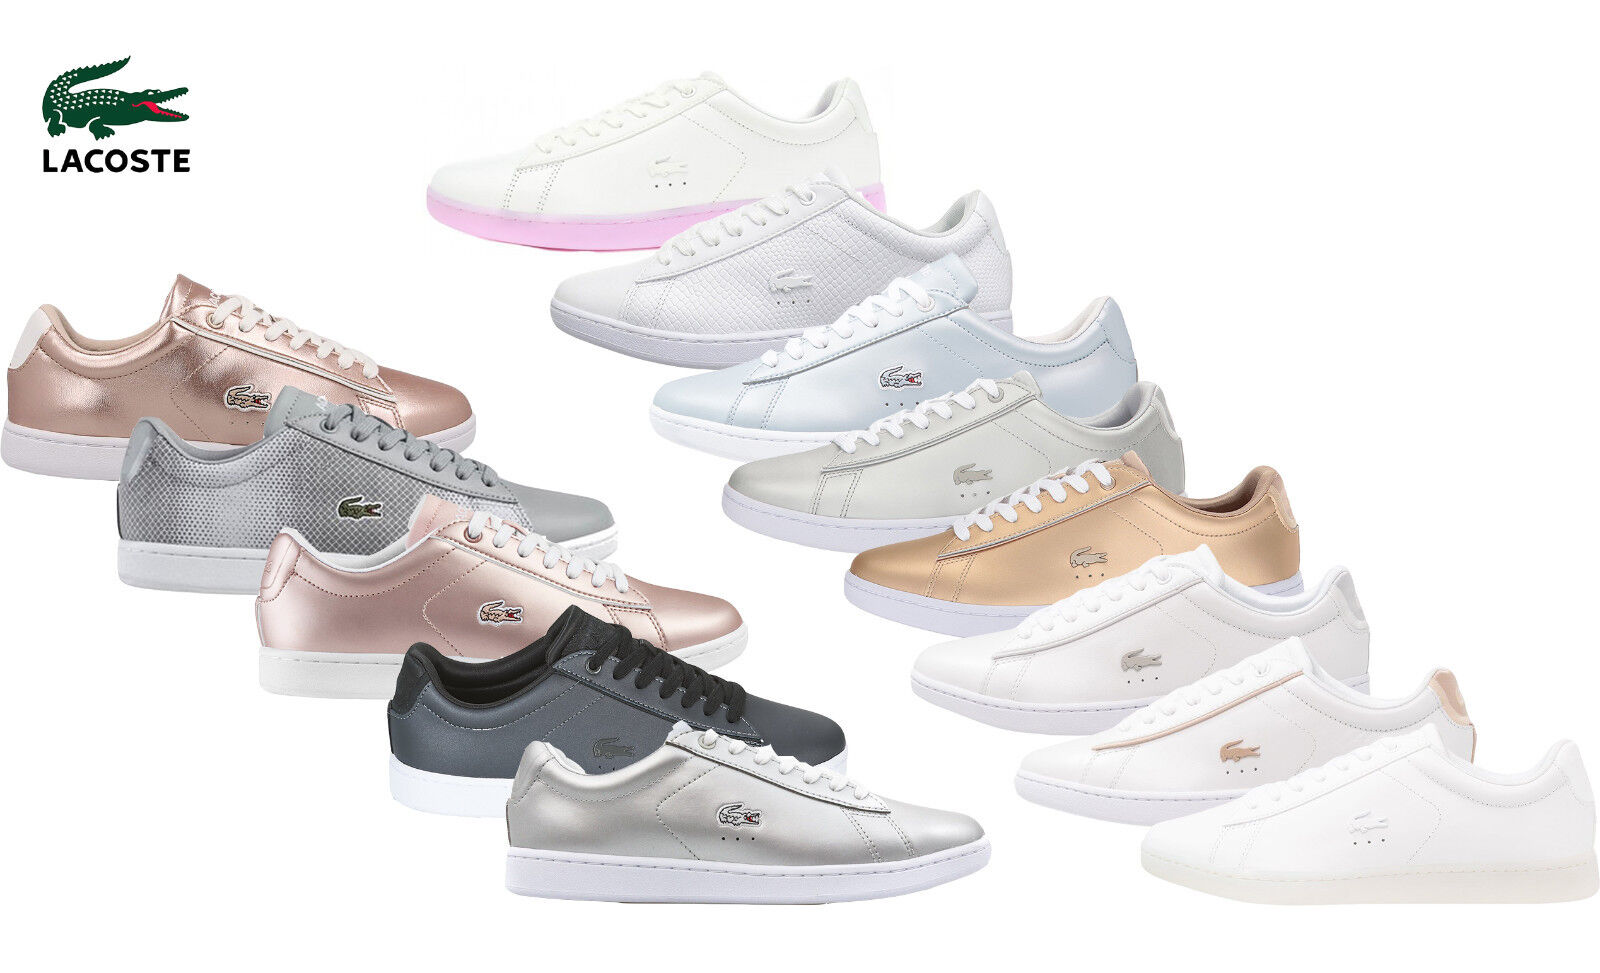 Женские кроссовки Lacoste Carnaby Fashion Sneakers — выберите цвет и размер НОВИНКА